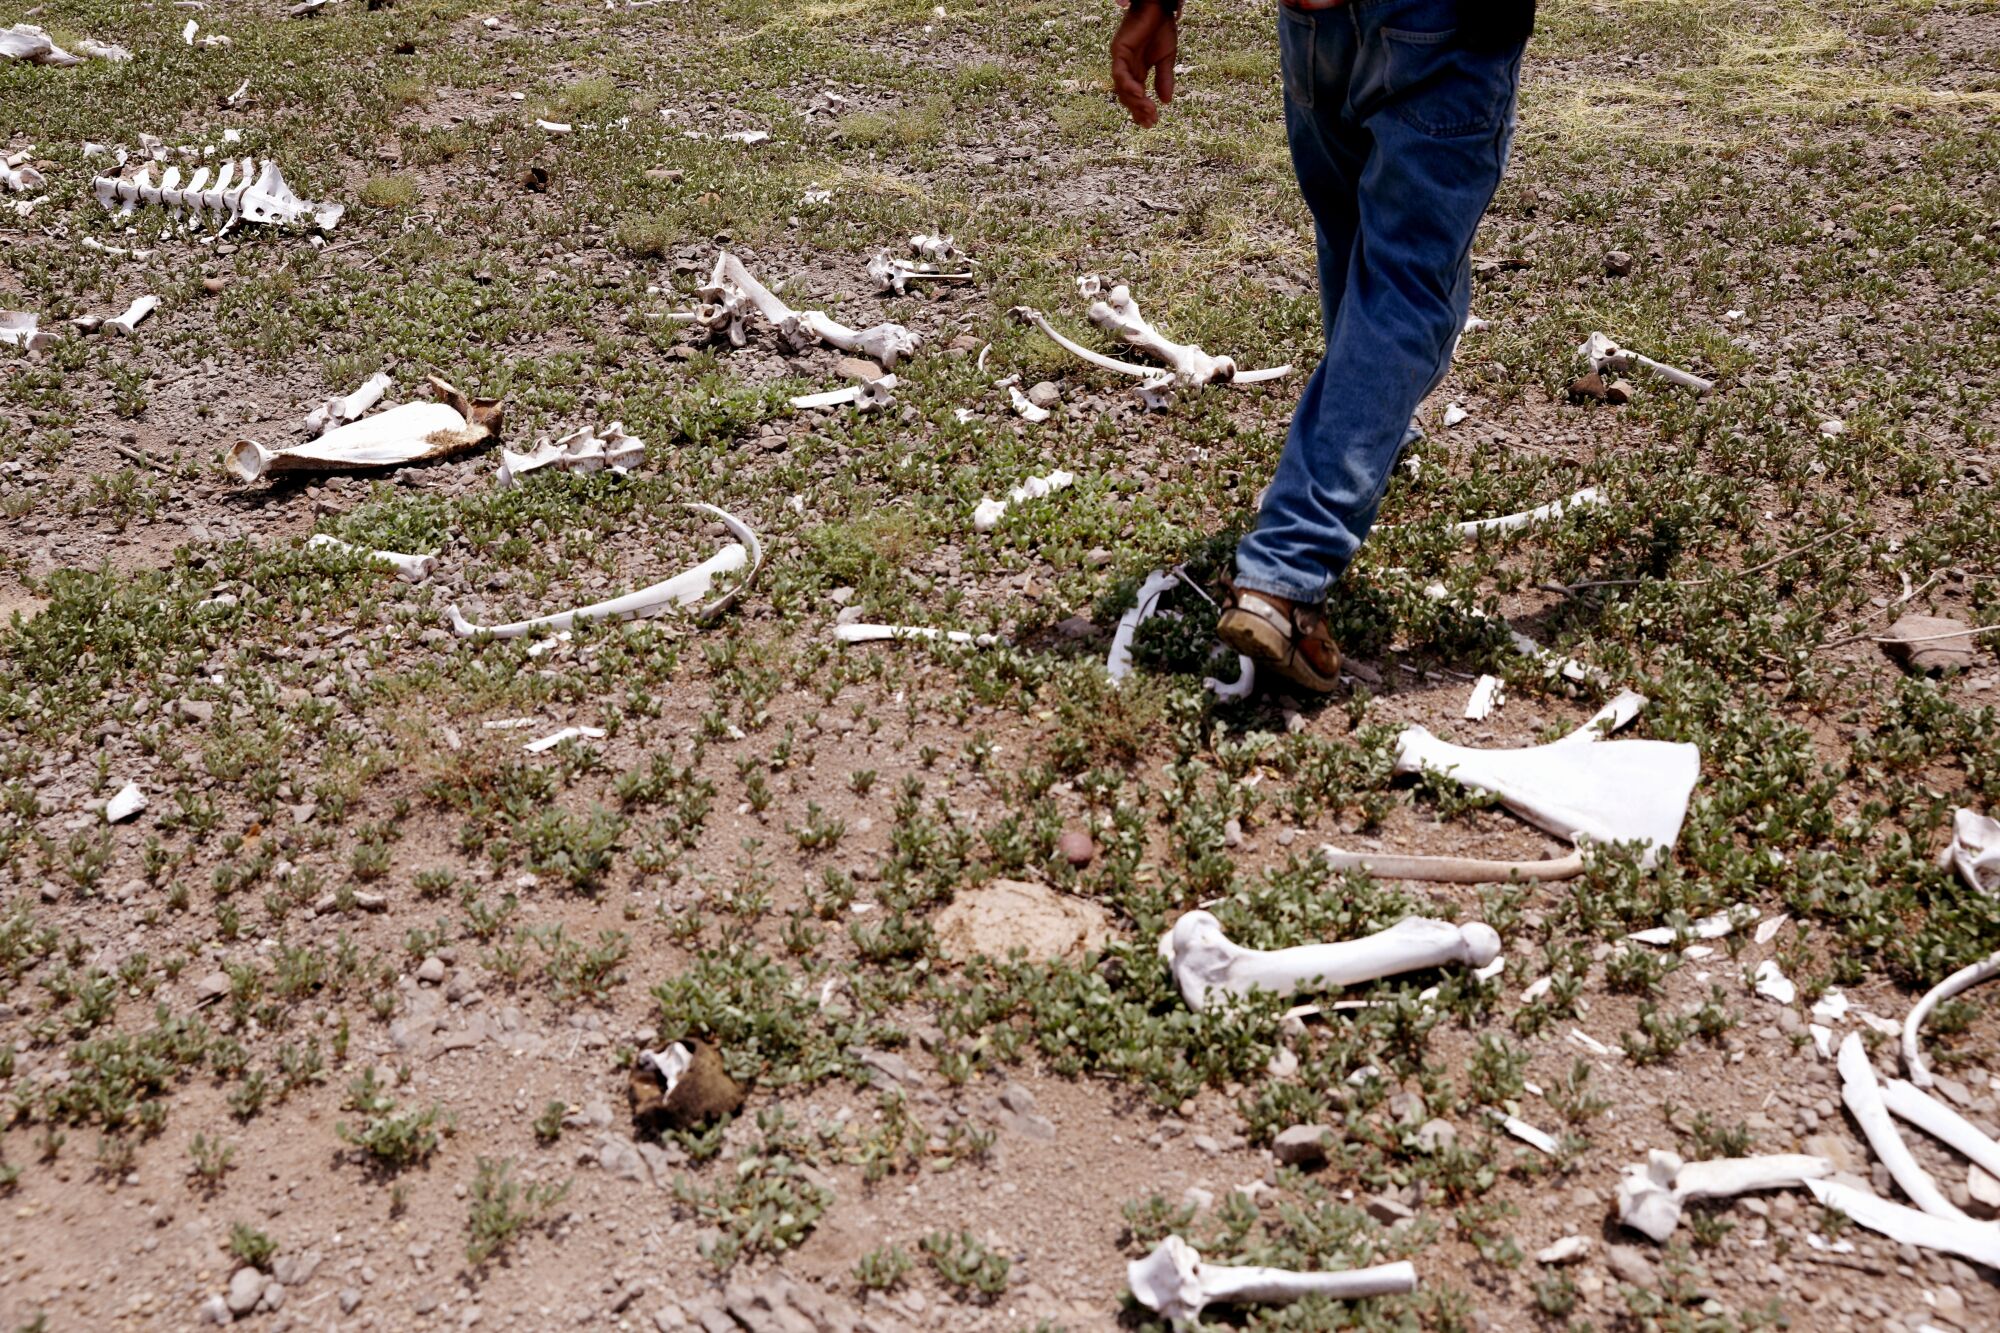  Manuel Bustamante Parra, walks through a field of bones from dead livestock.